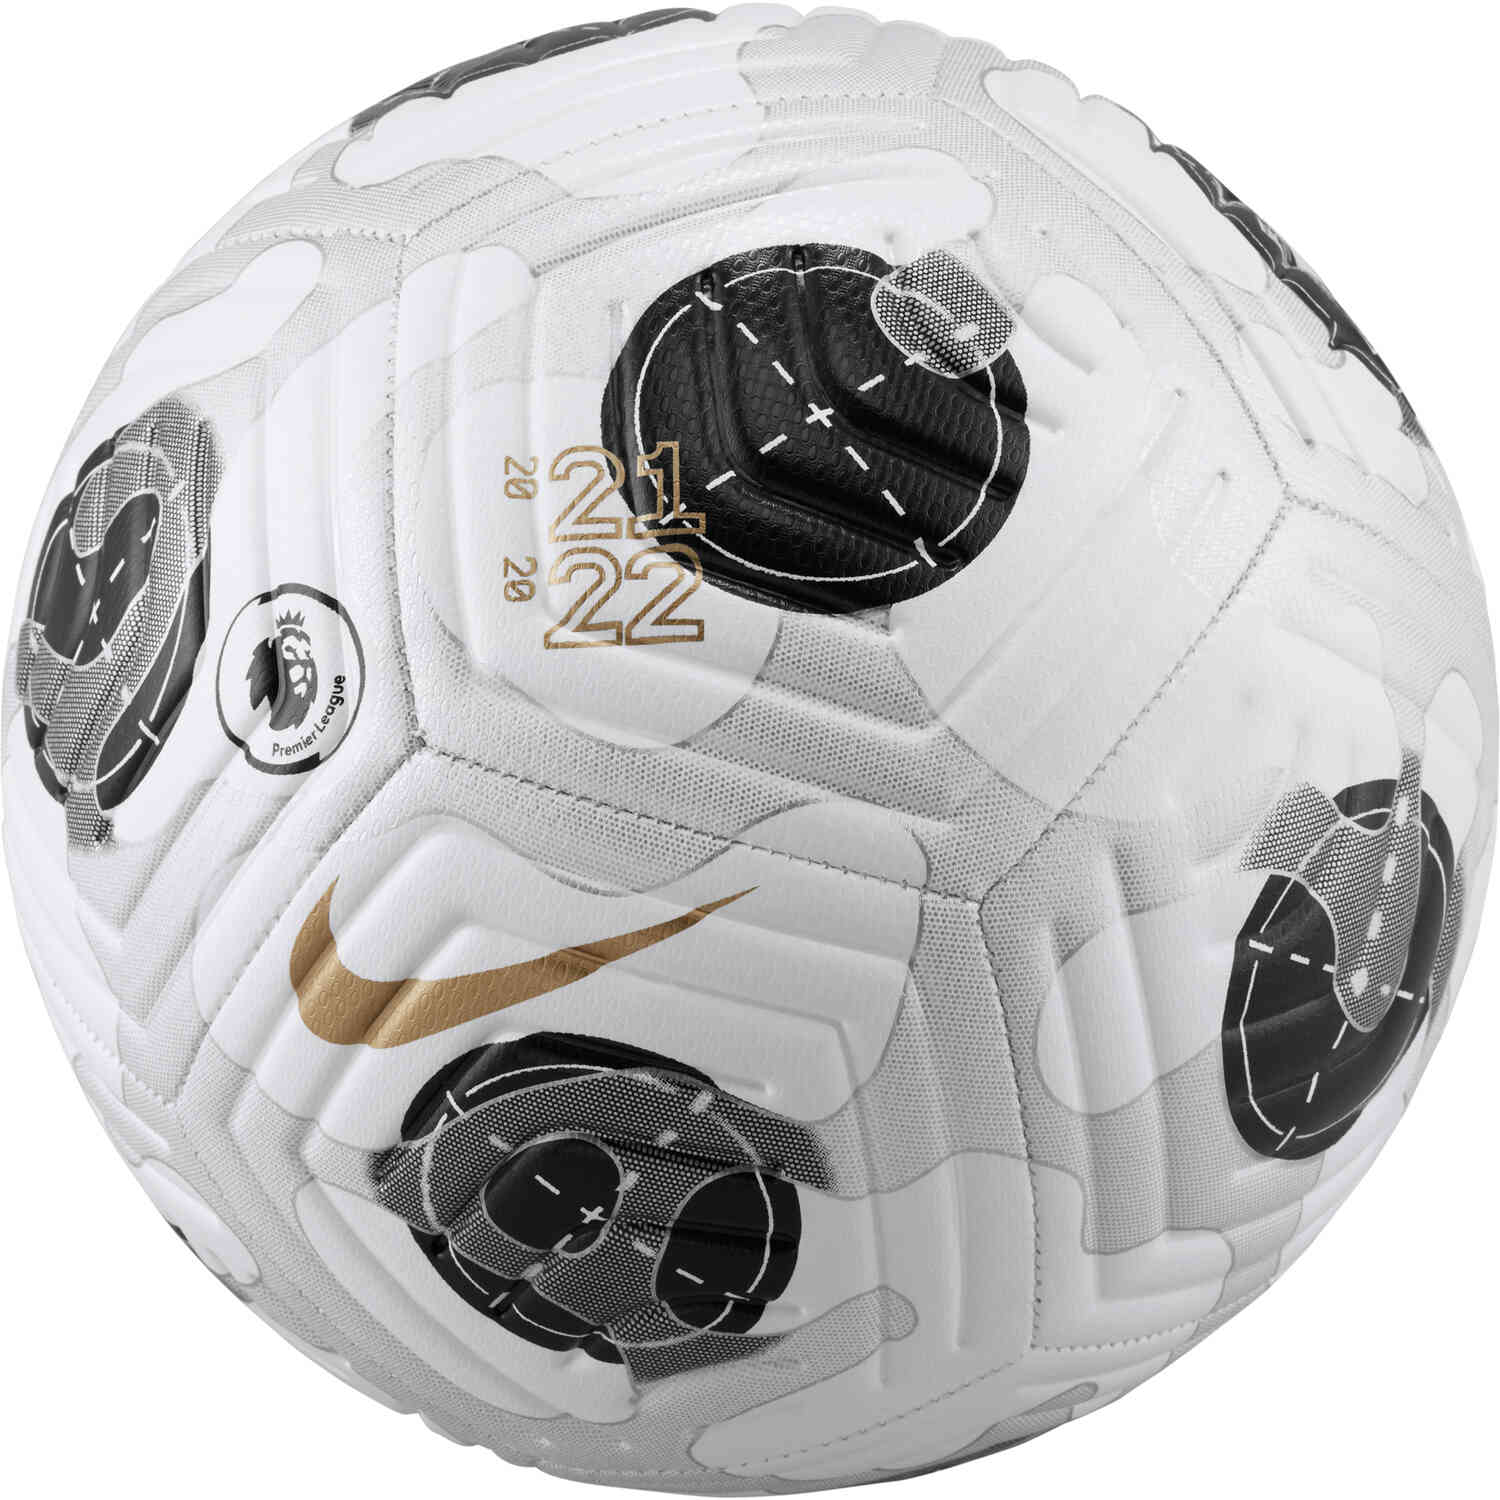 nike premier league strike soccer ball size 4